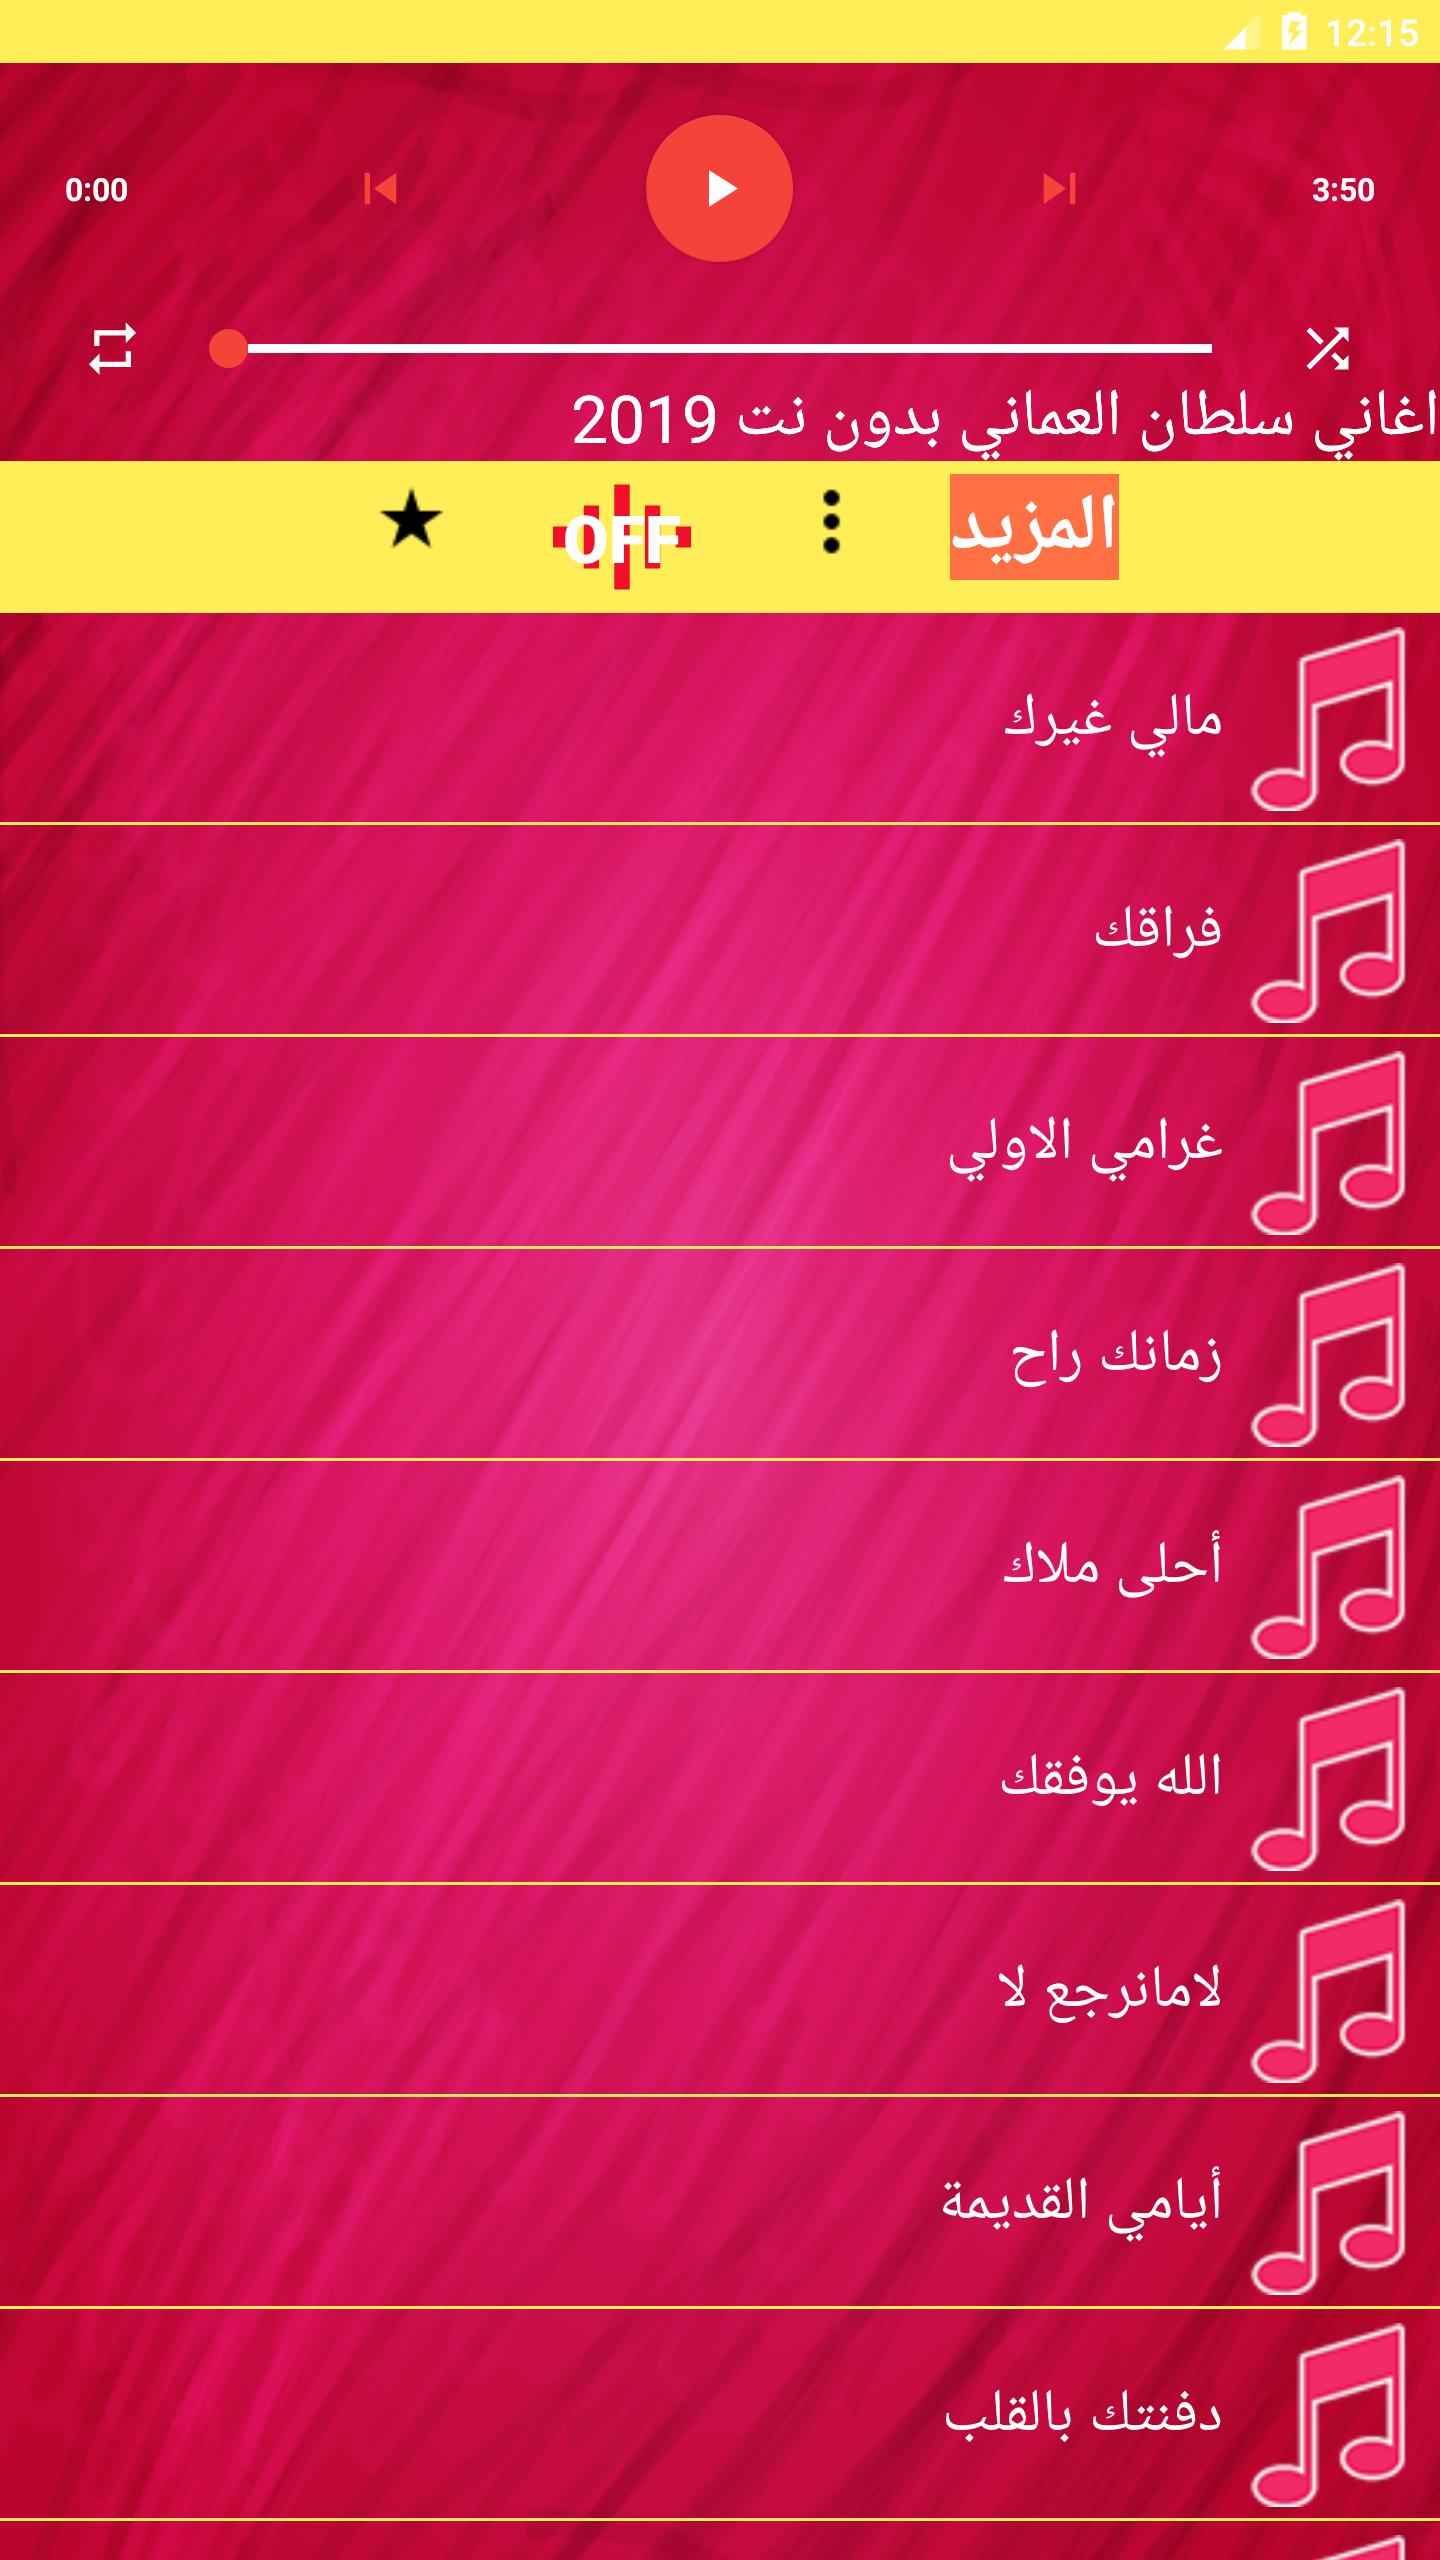 اغاني سلطان العماني طرب اه يا دنيا 2019 For Android Apk Download